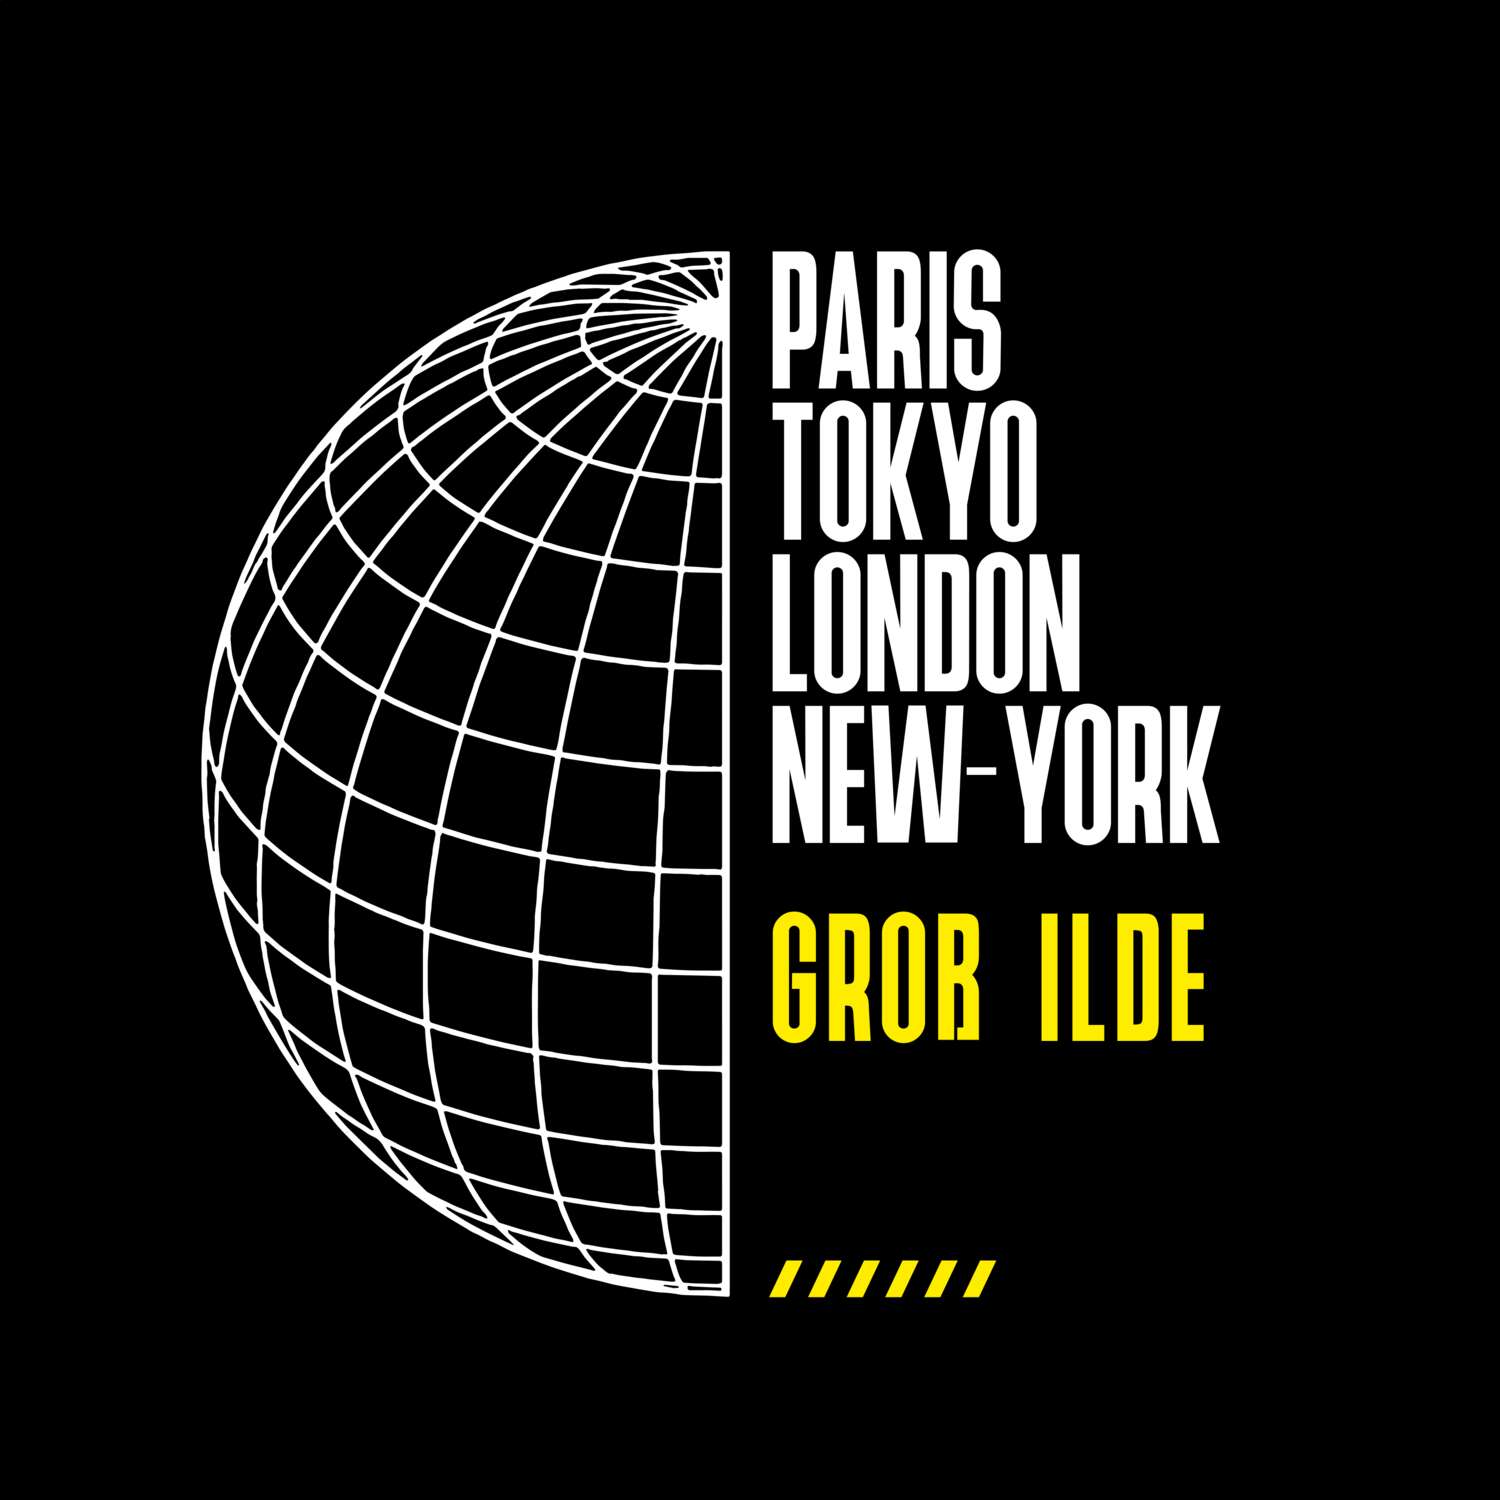 Groß Ilde T-Shirt »Paris Tokyo London«